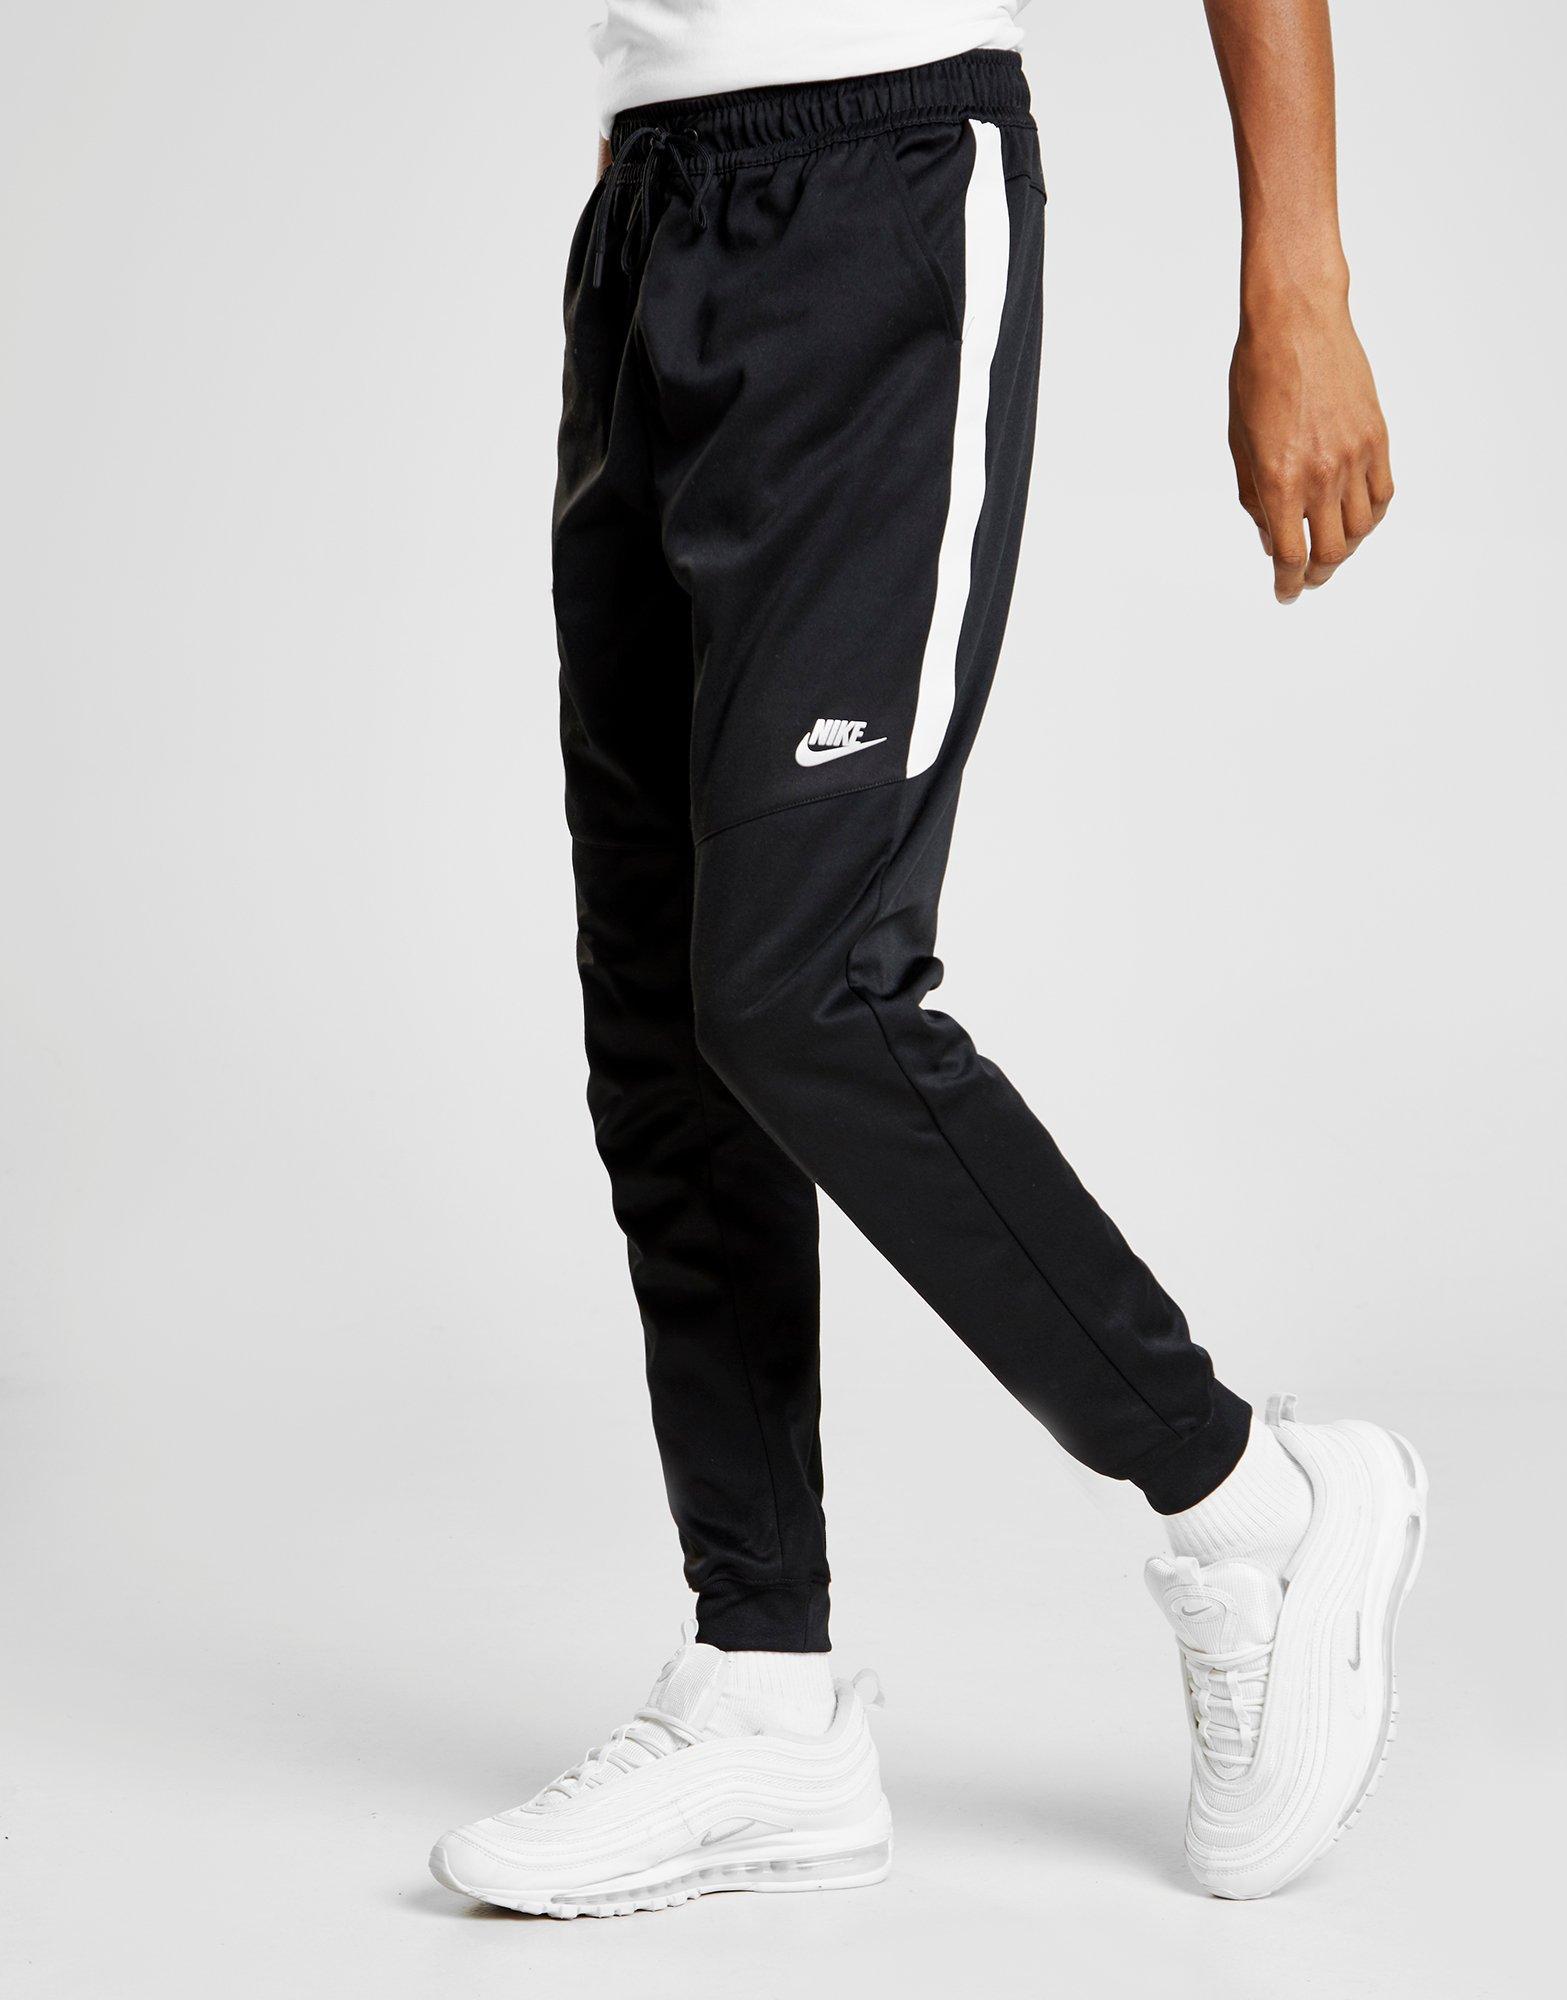 Nike Tribute Dc Track Pants Hot Sale, SAVE 47% - lutheranems.com